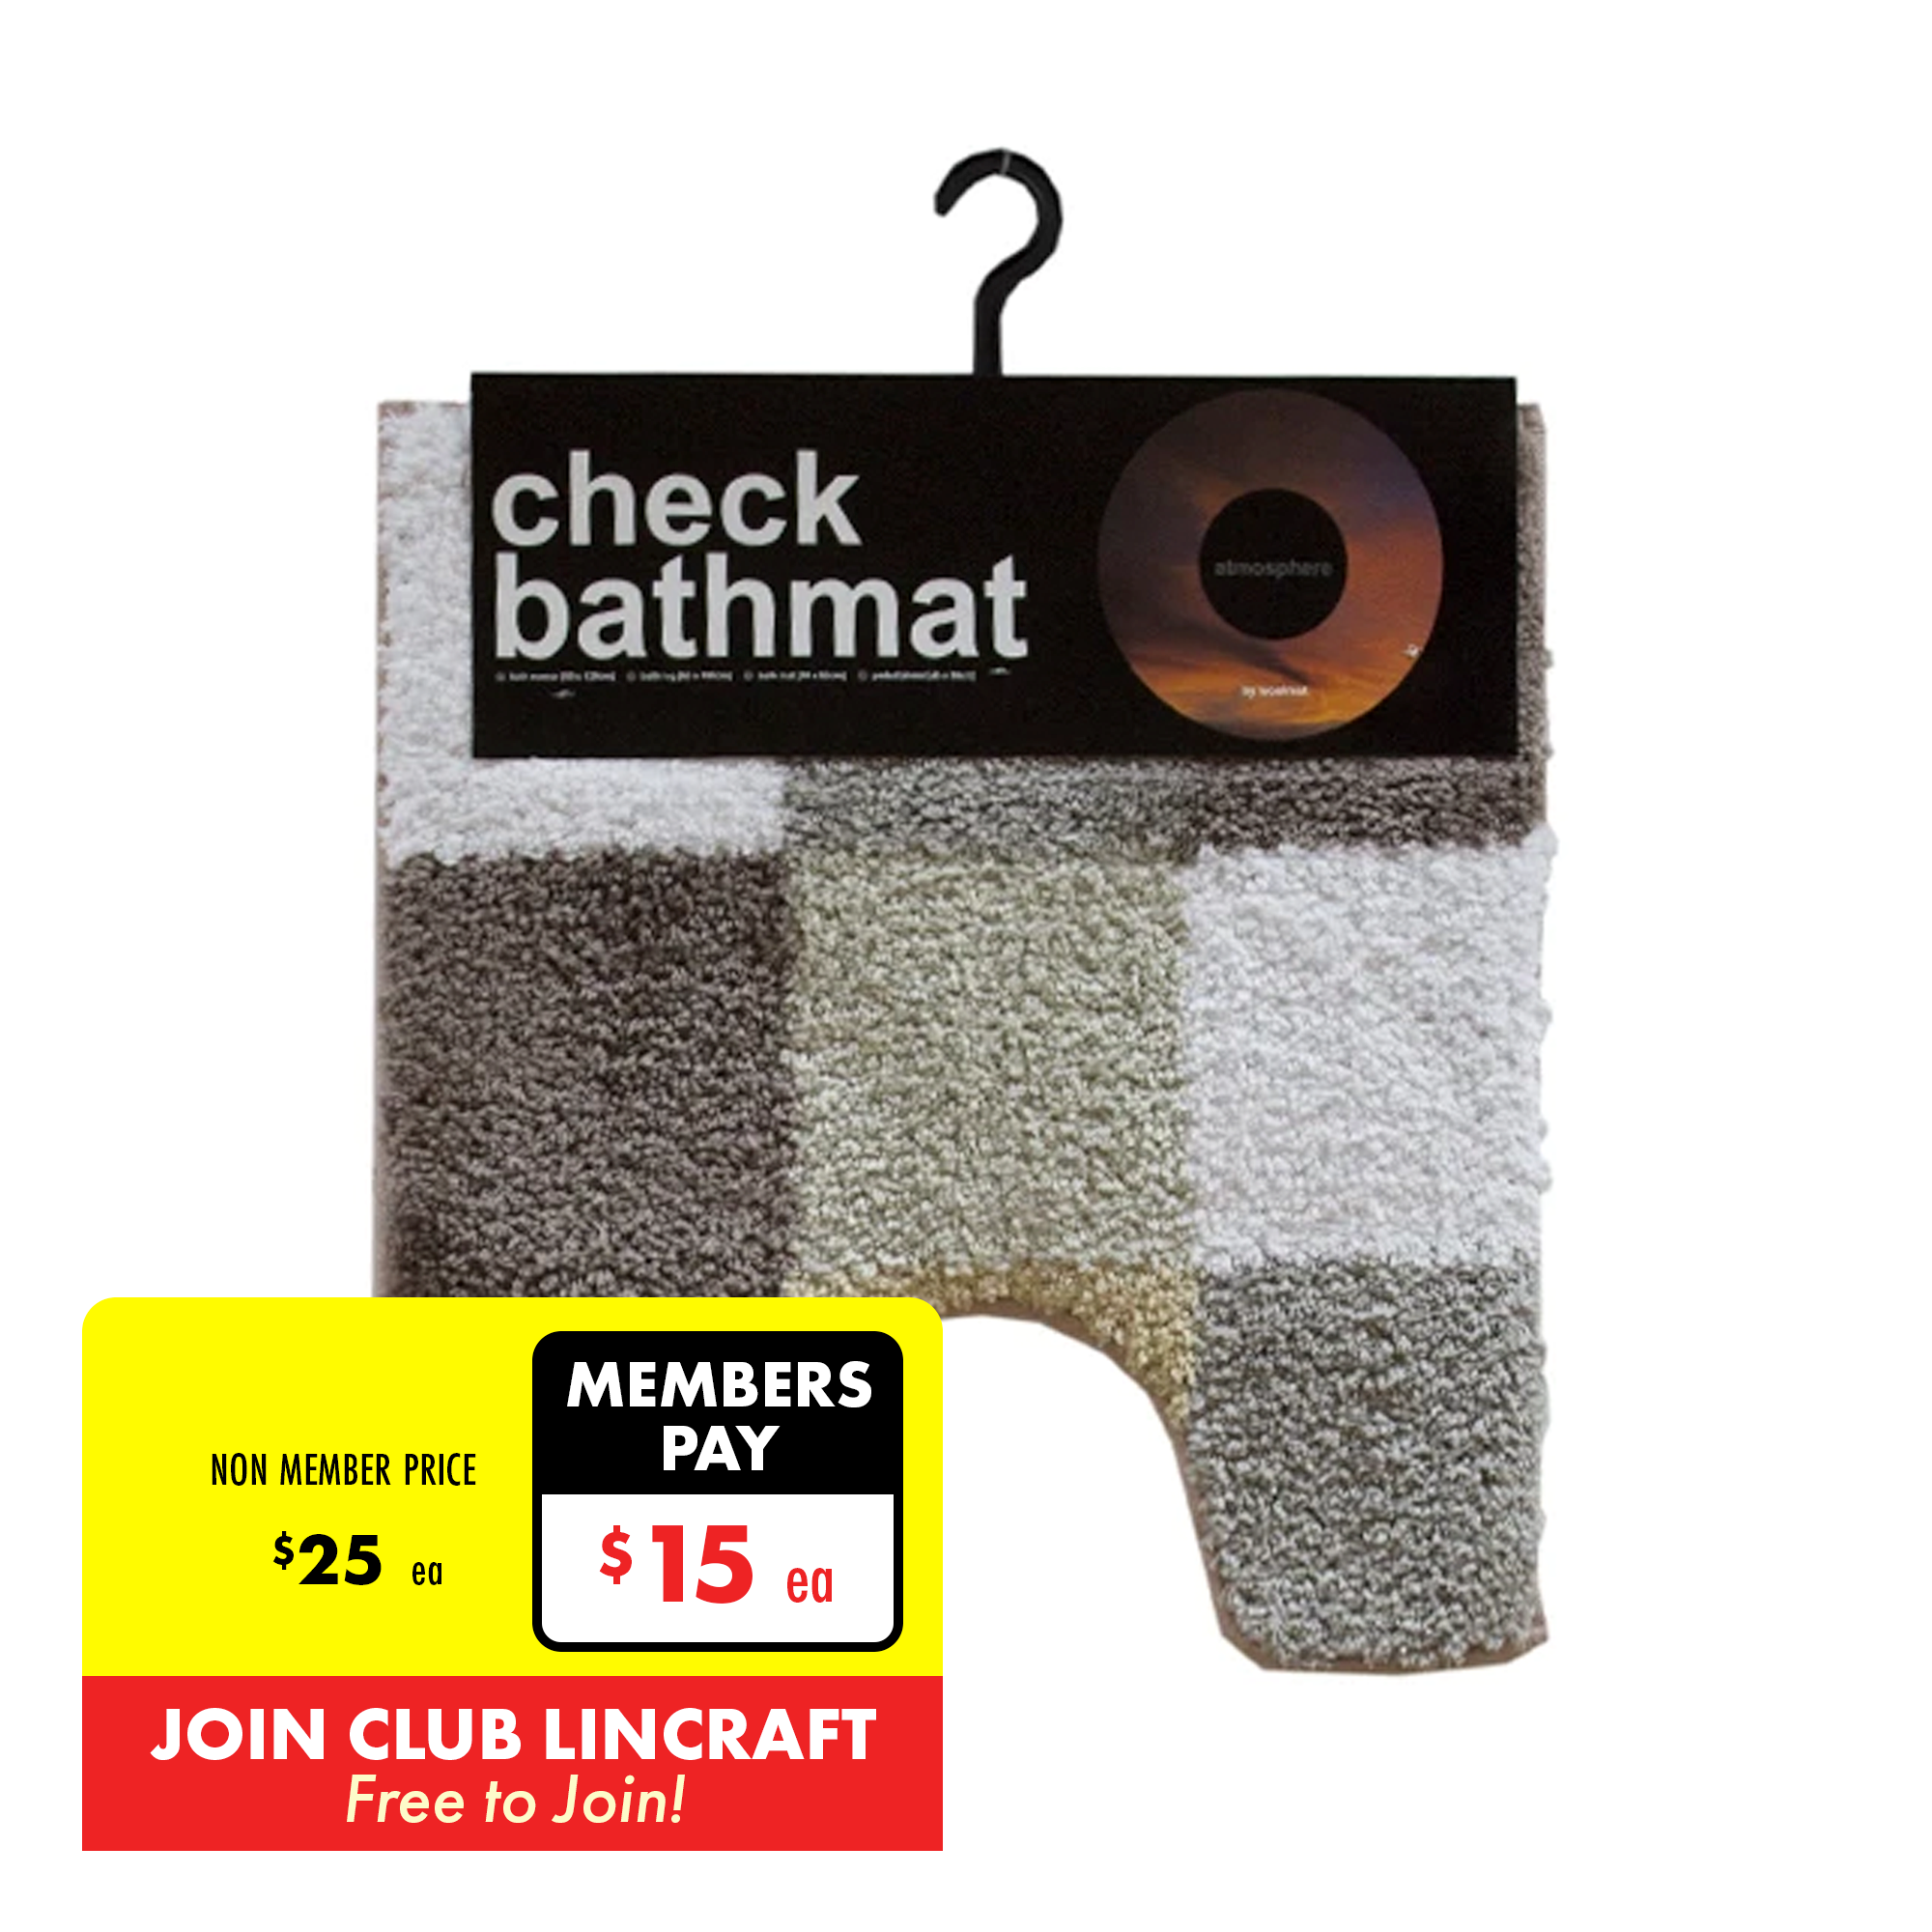 25pcs Black Crayola Ultra-Clean Washable Ultra Lavabla